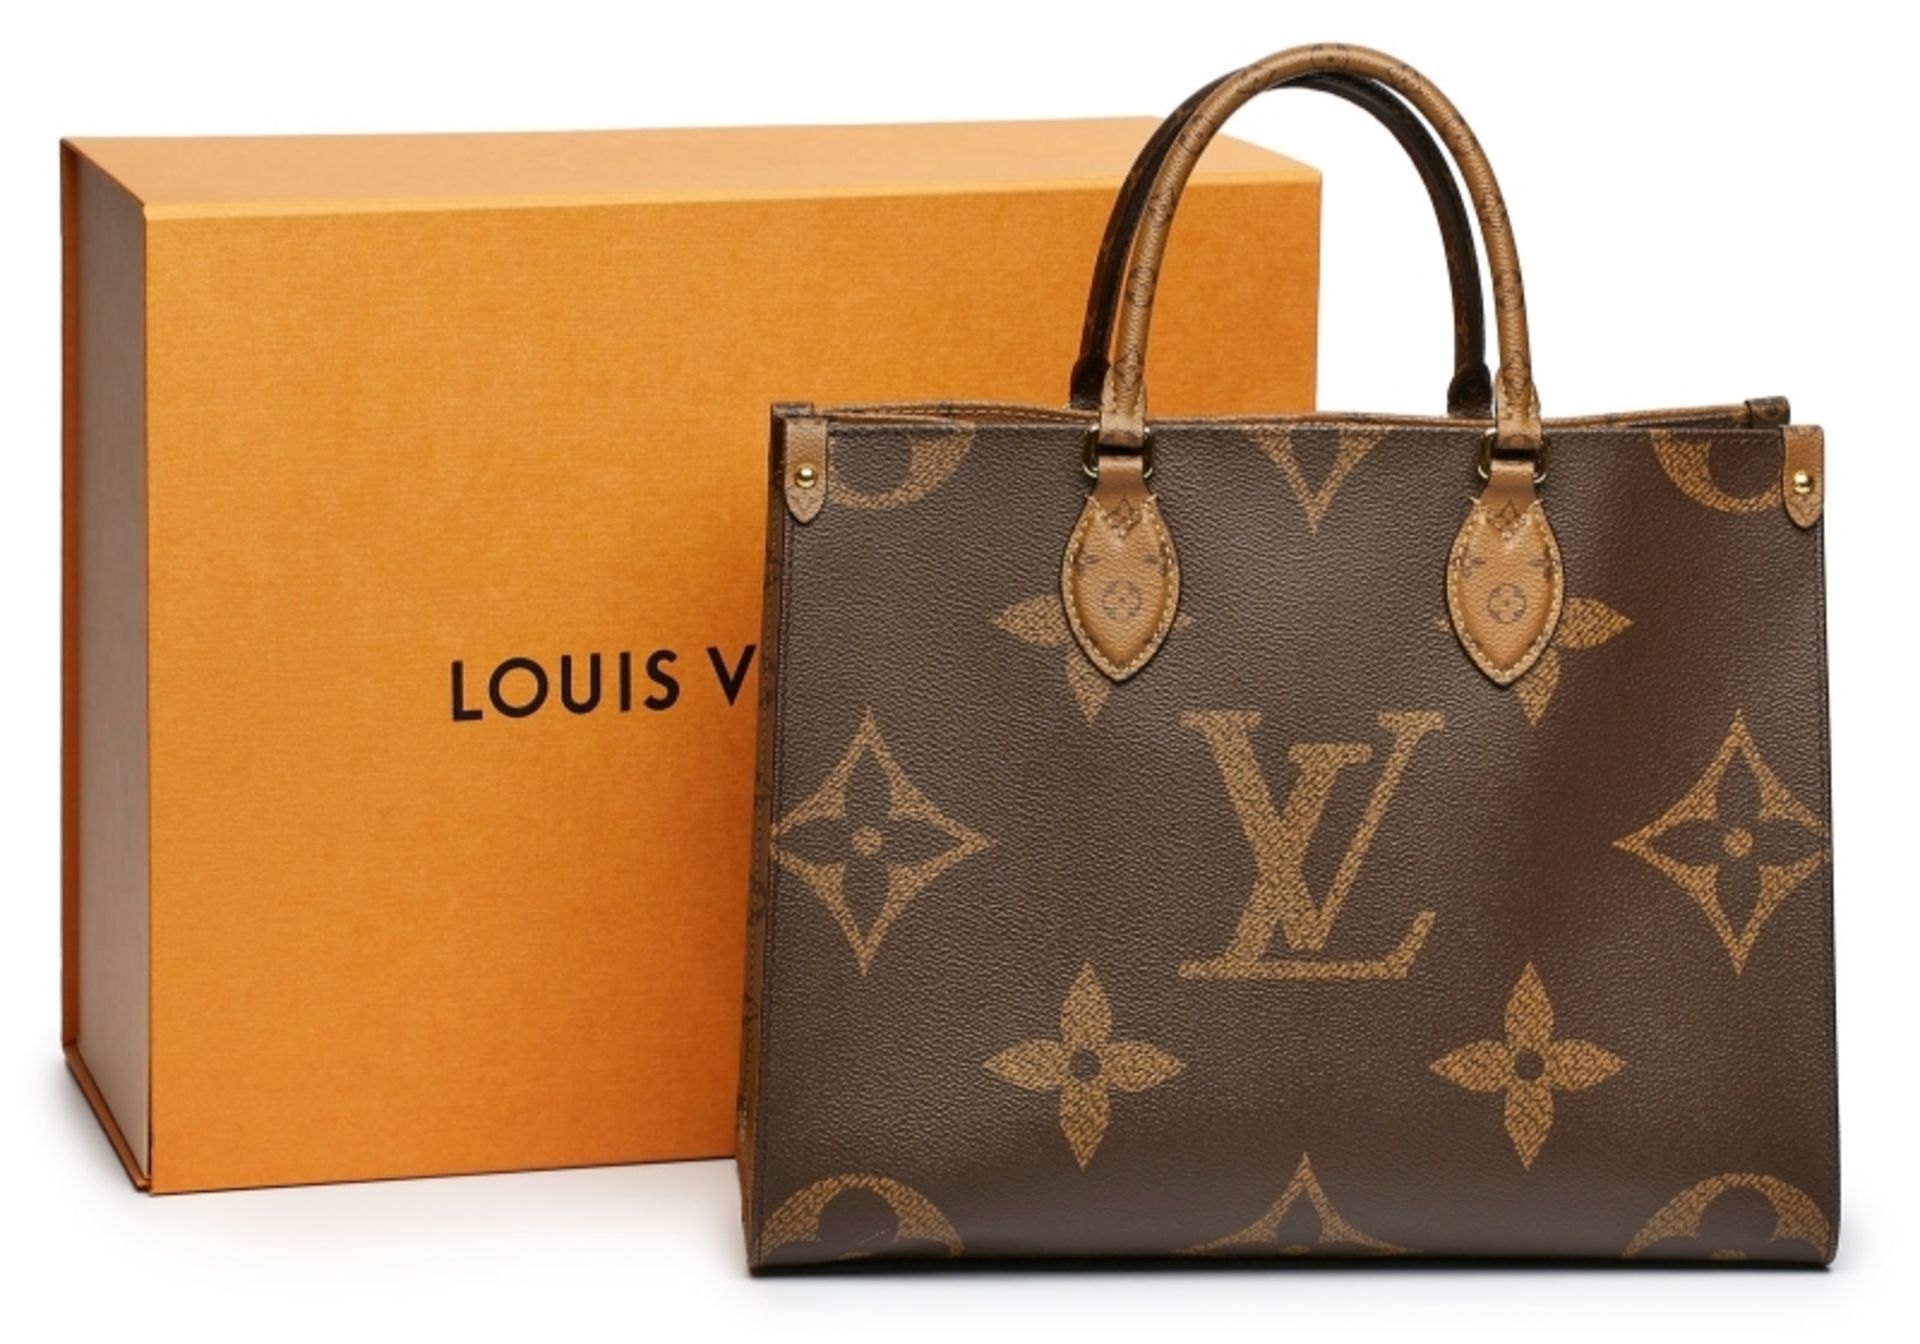 Handtasche/ Tote Bag "Onthego" MM, Louis Vuitton 2021.